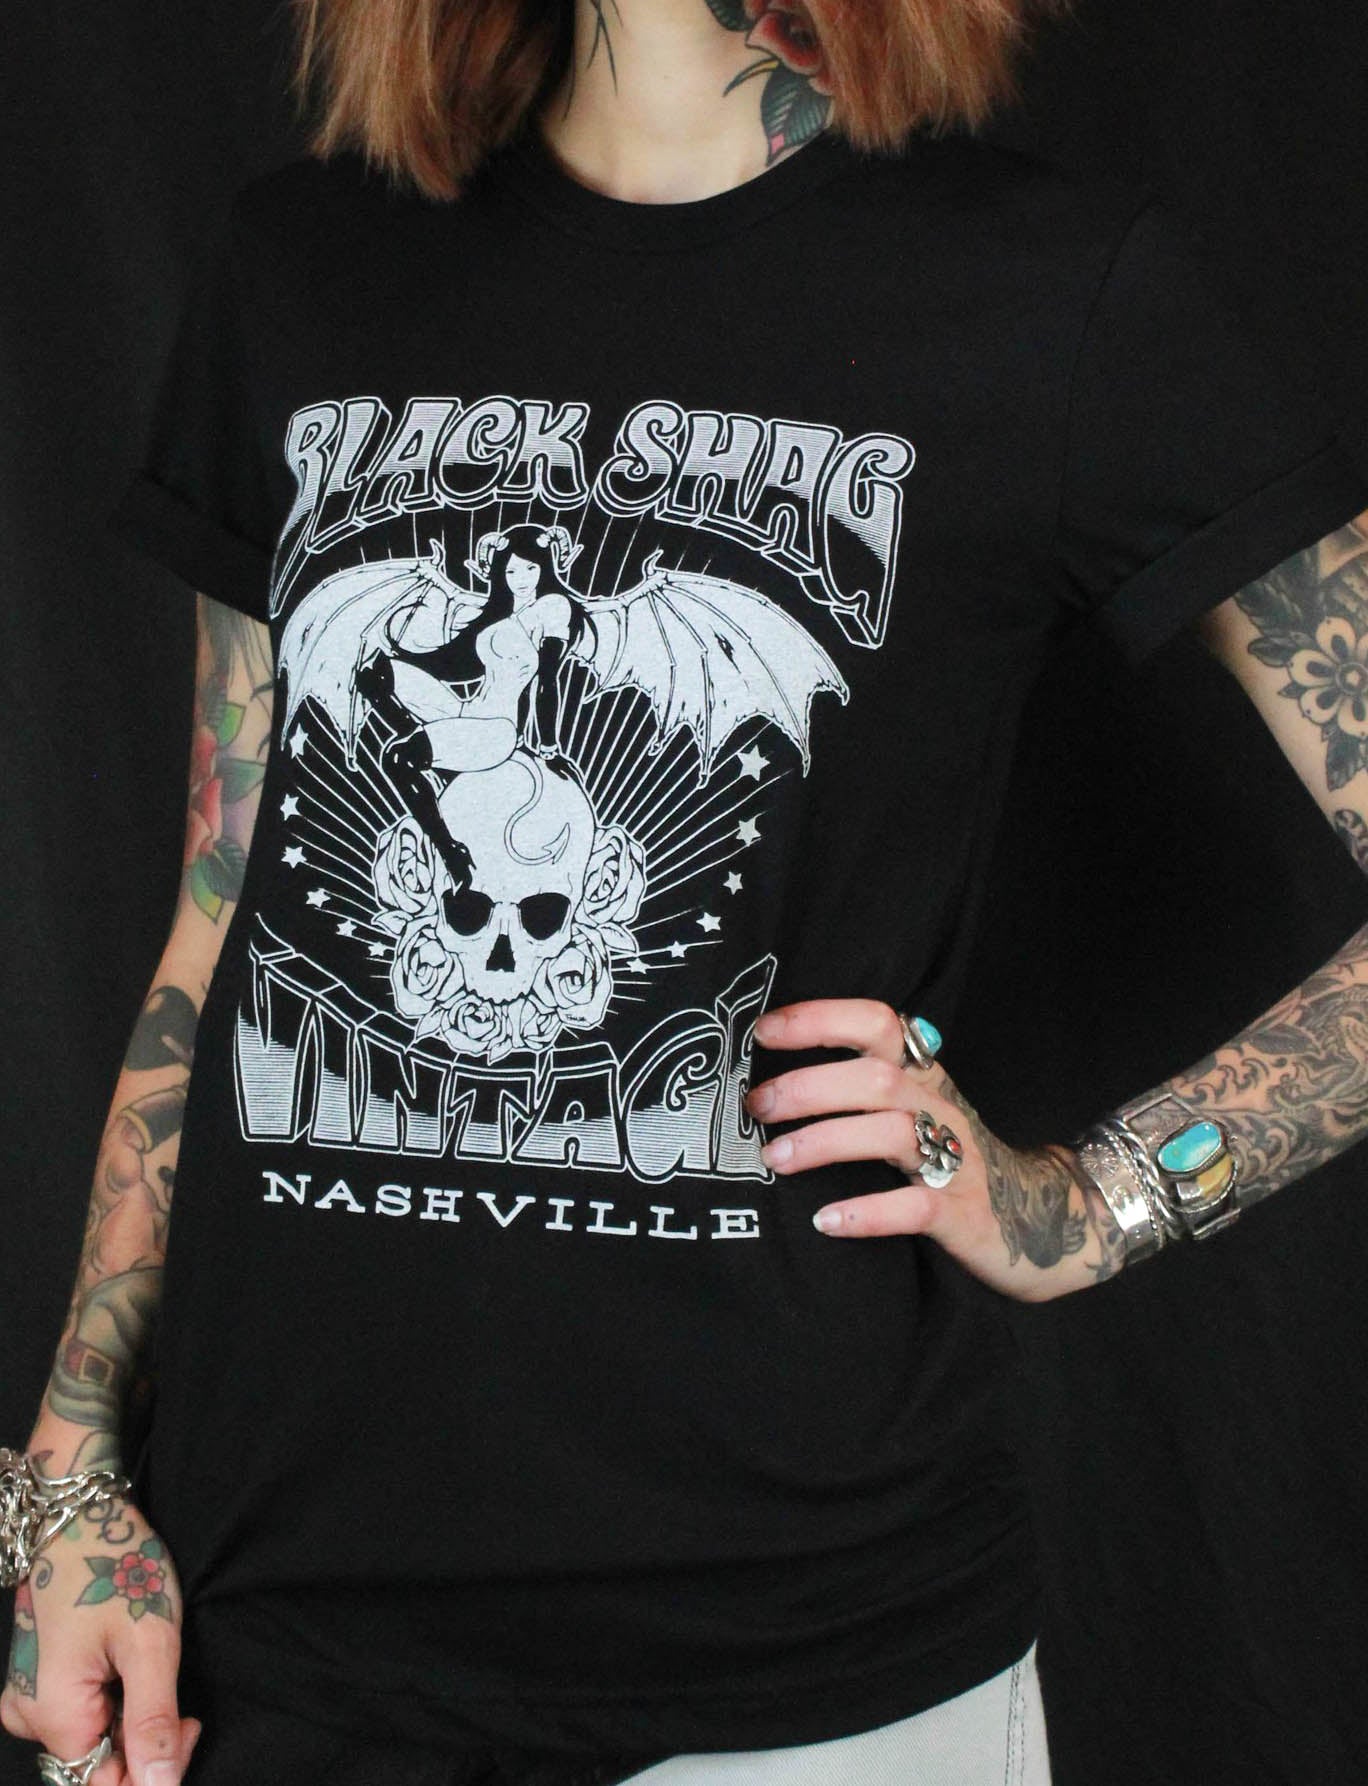 Black Shag Vintage Nashville Devil Woman Black T Shirt Unisex XS To 2XL